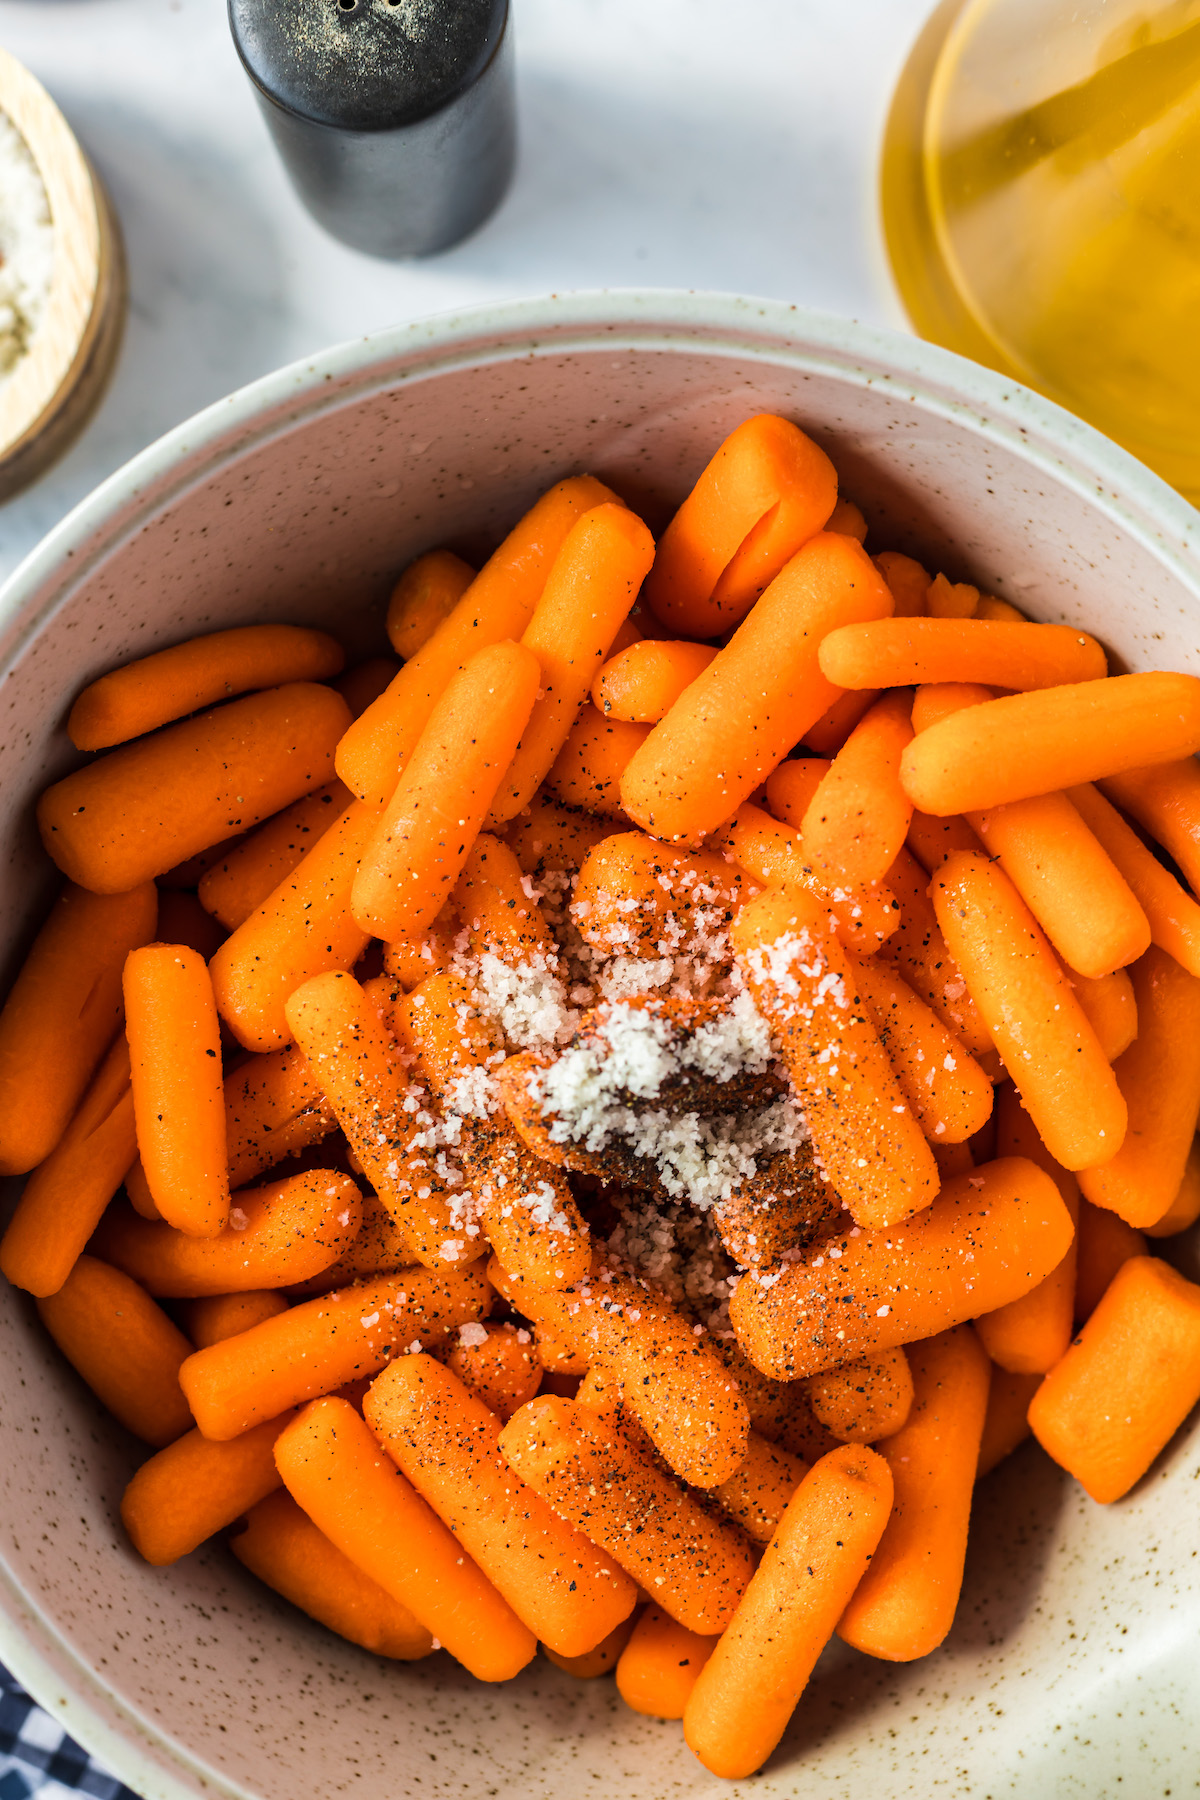 seasonings in bowl with baby carrots